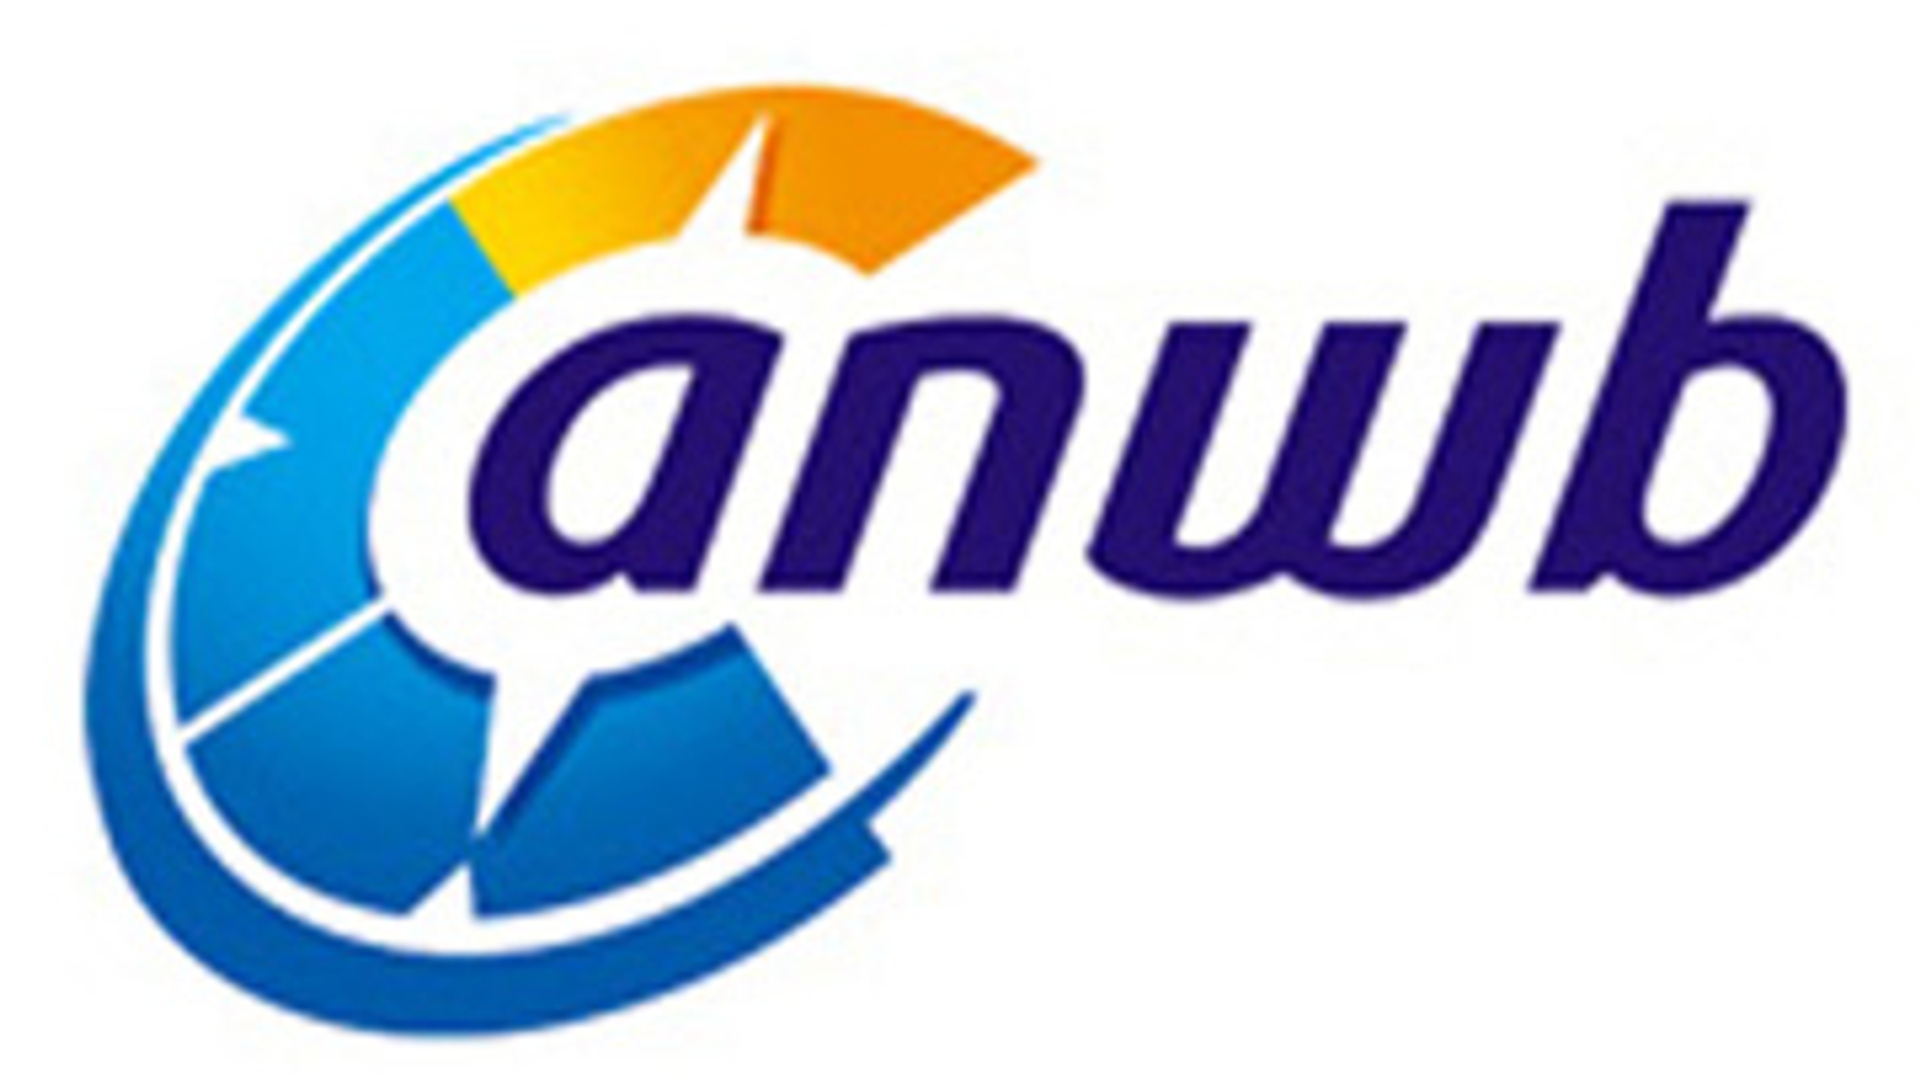 anwb-logo-groot_01.jpg